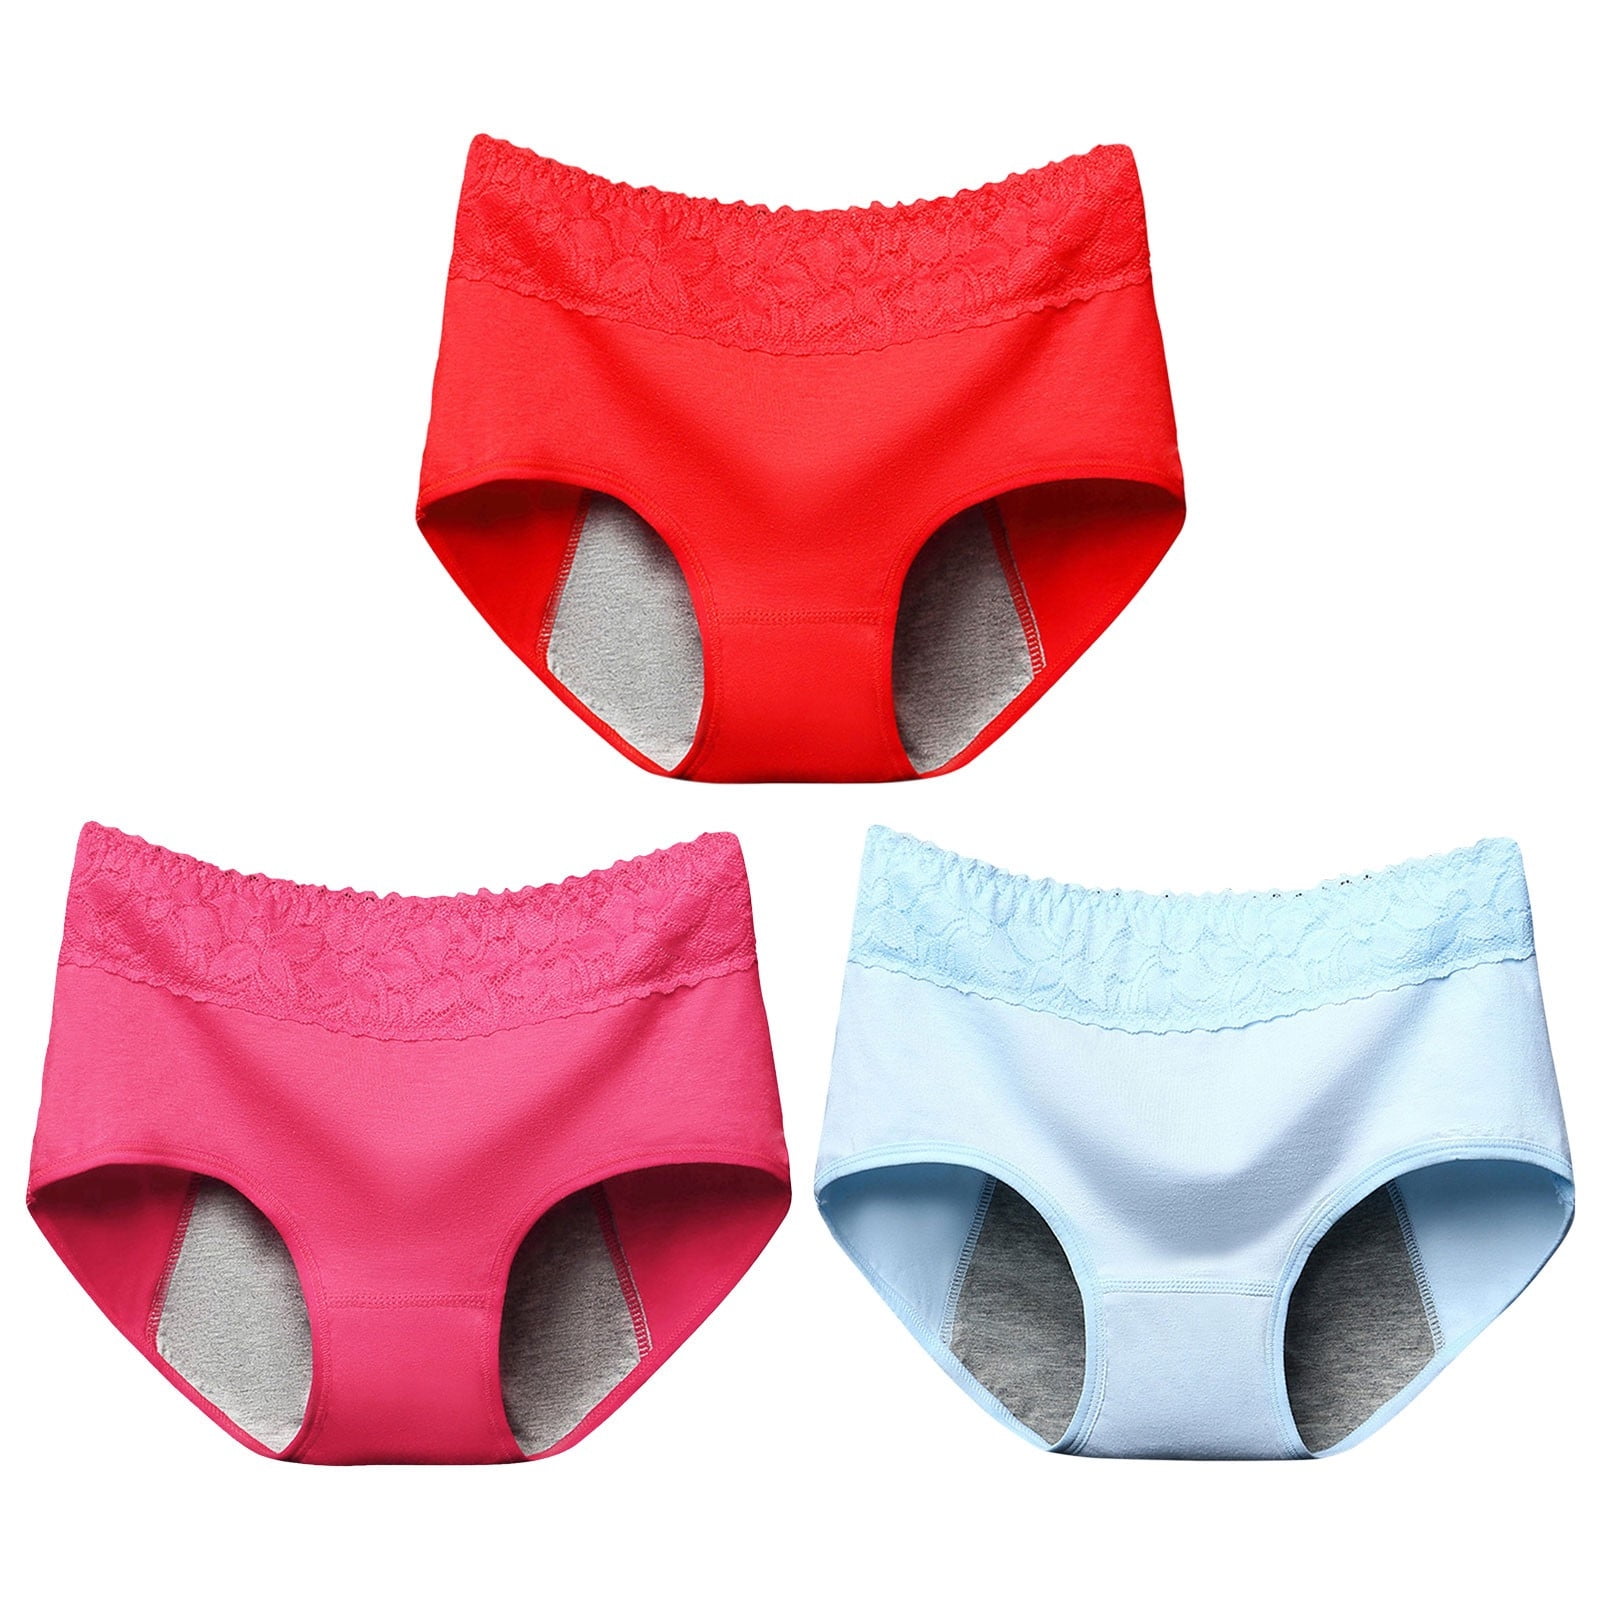 Body4Real Organic Clothing 100% Cotton Women's Panty Ladies Underwear